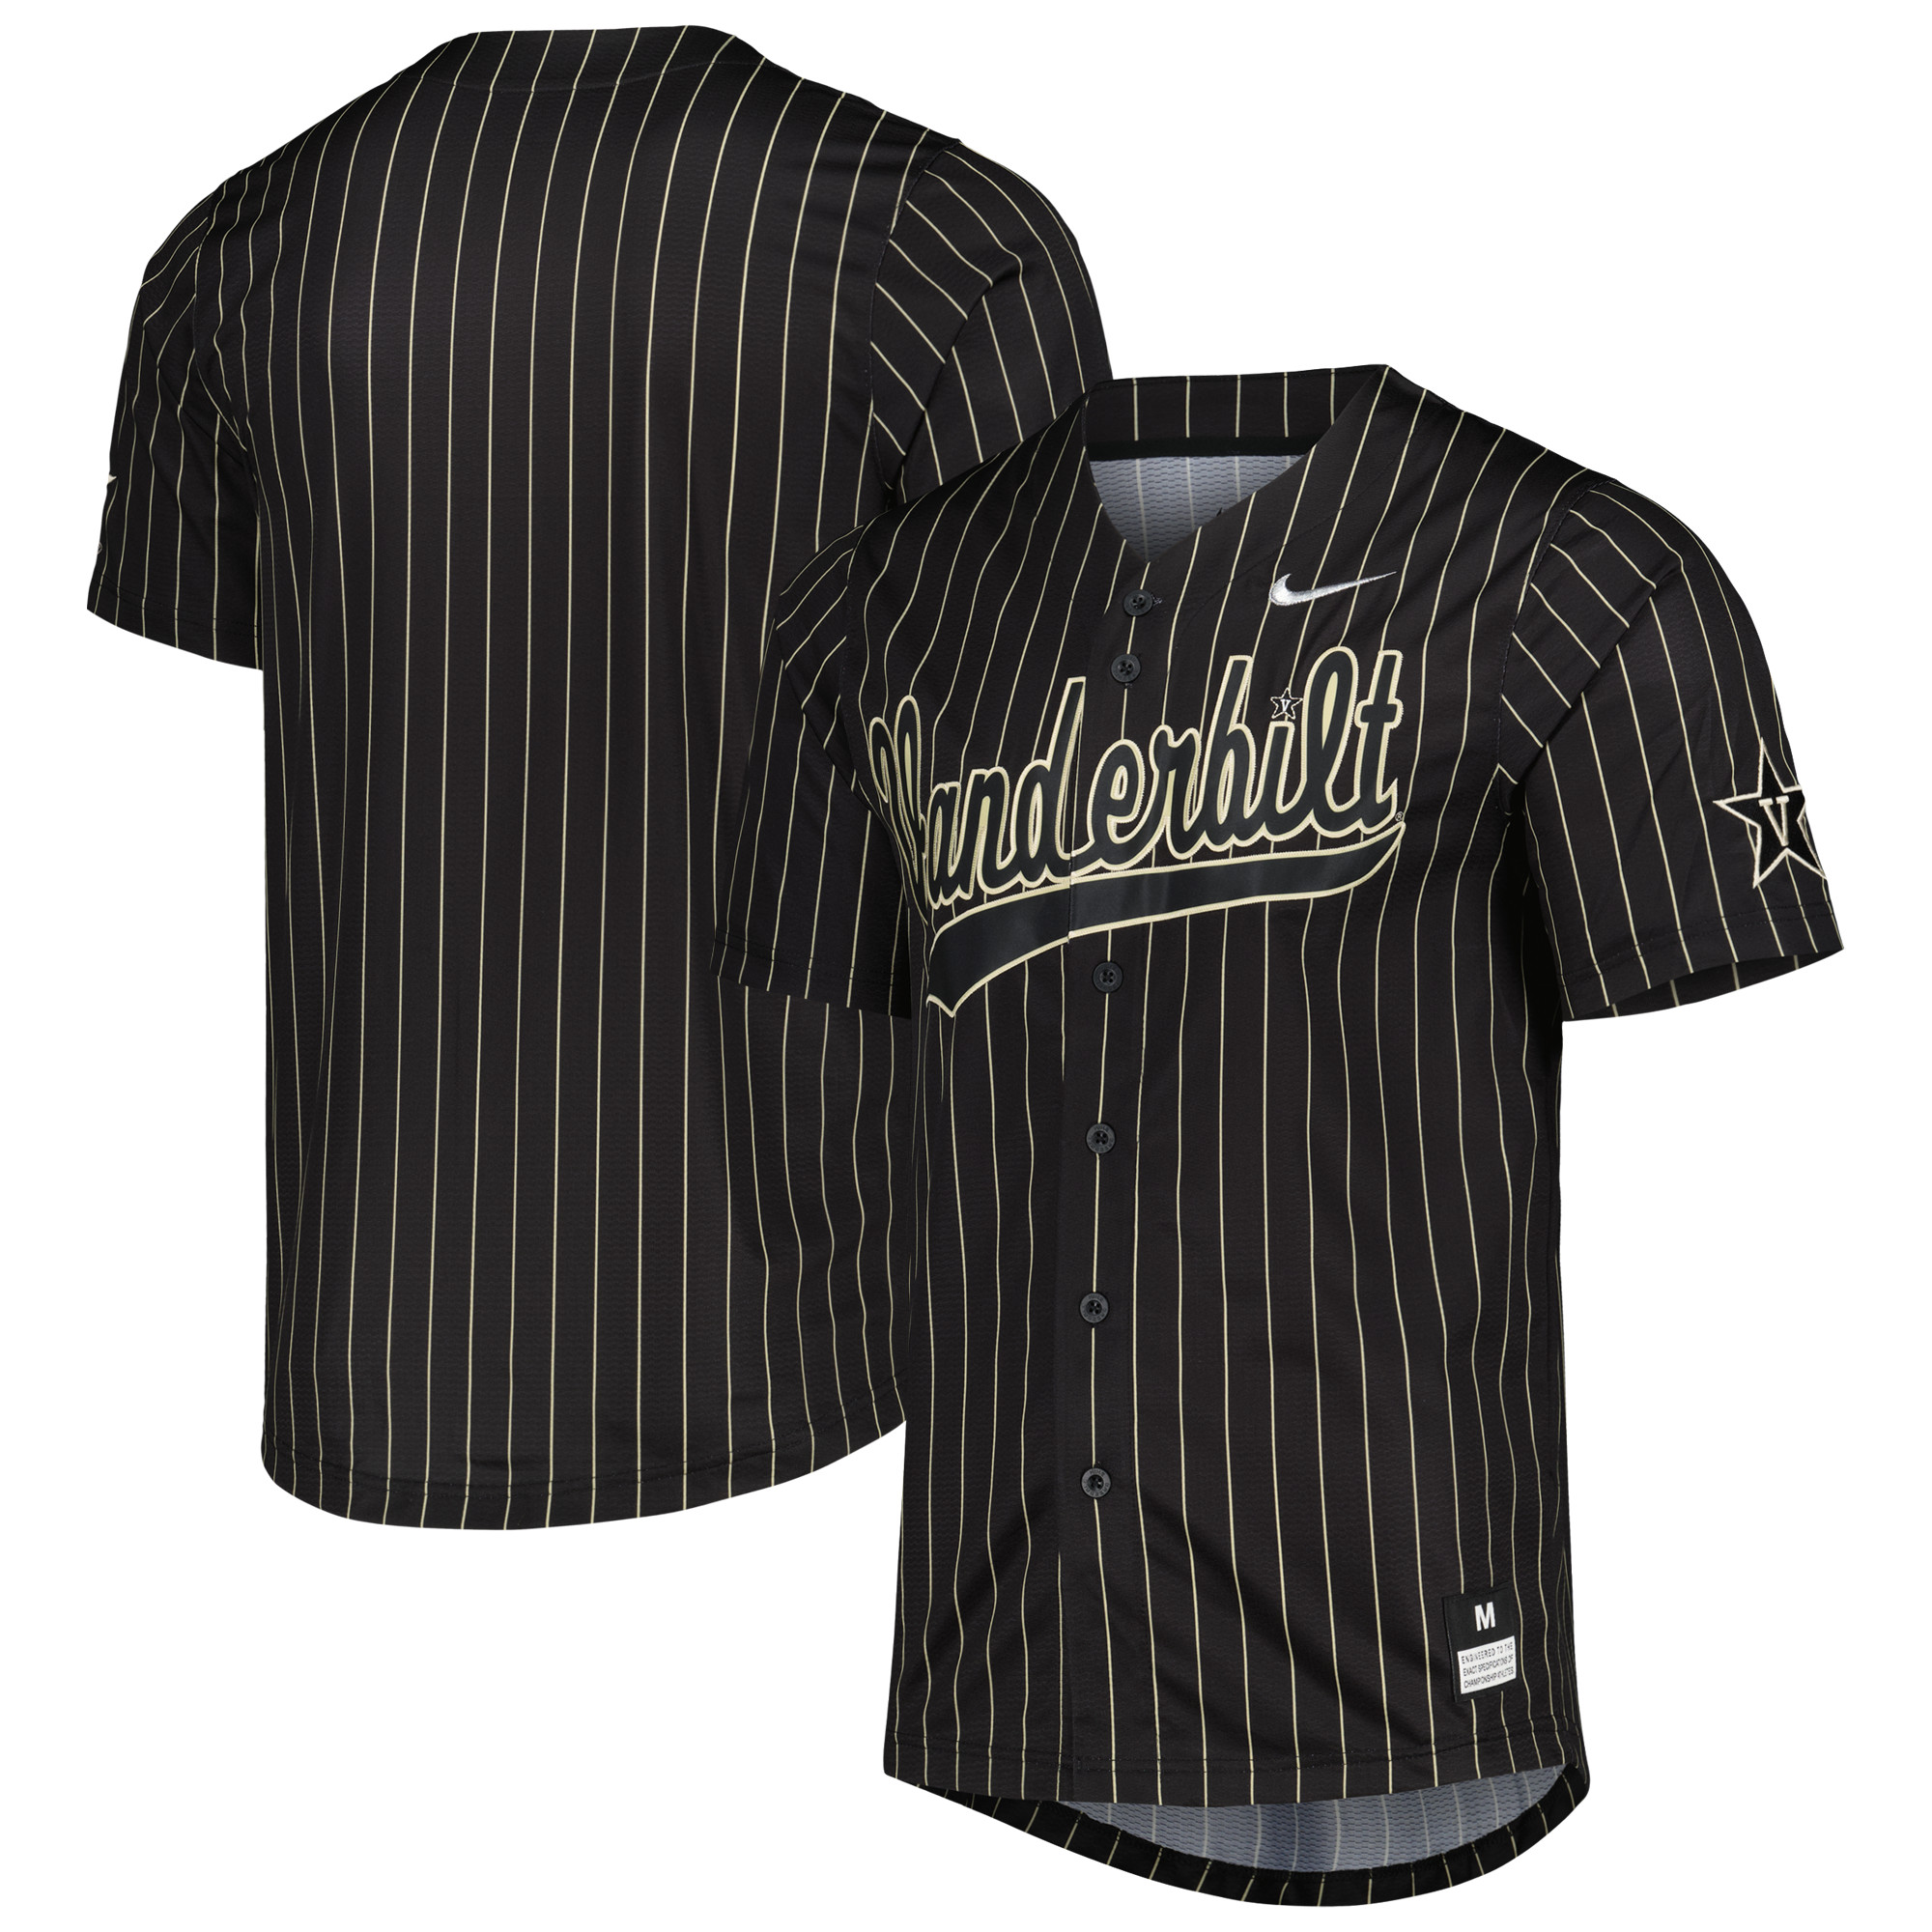 Men's Nike Black/Gold Vanderbilt Commodores Pinstripe Replica Full-Button Baseball Jersey - image 1 of 3